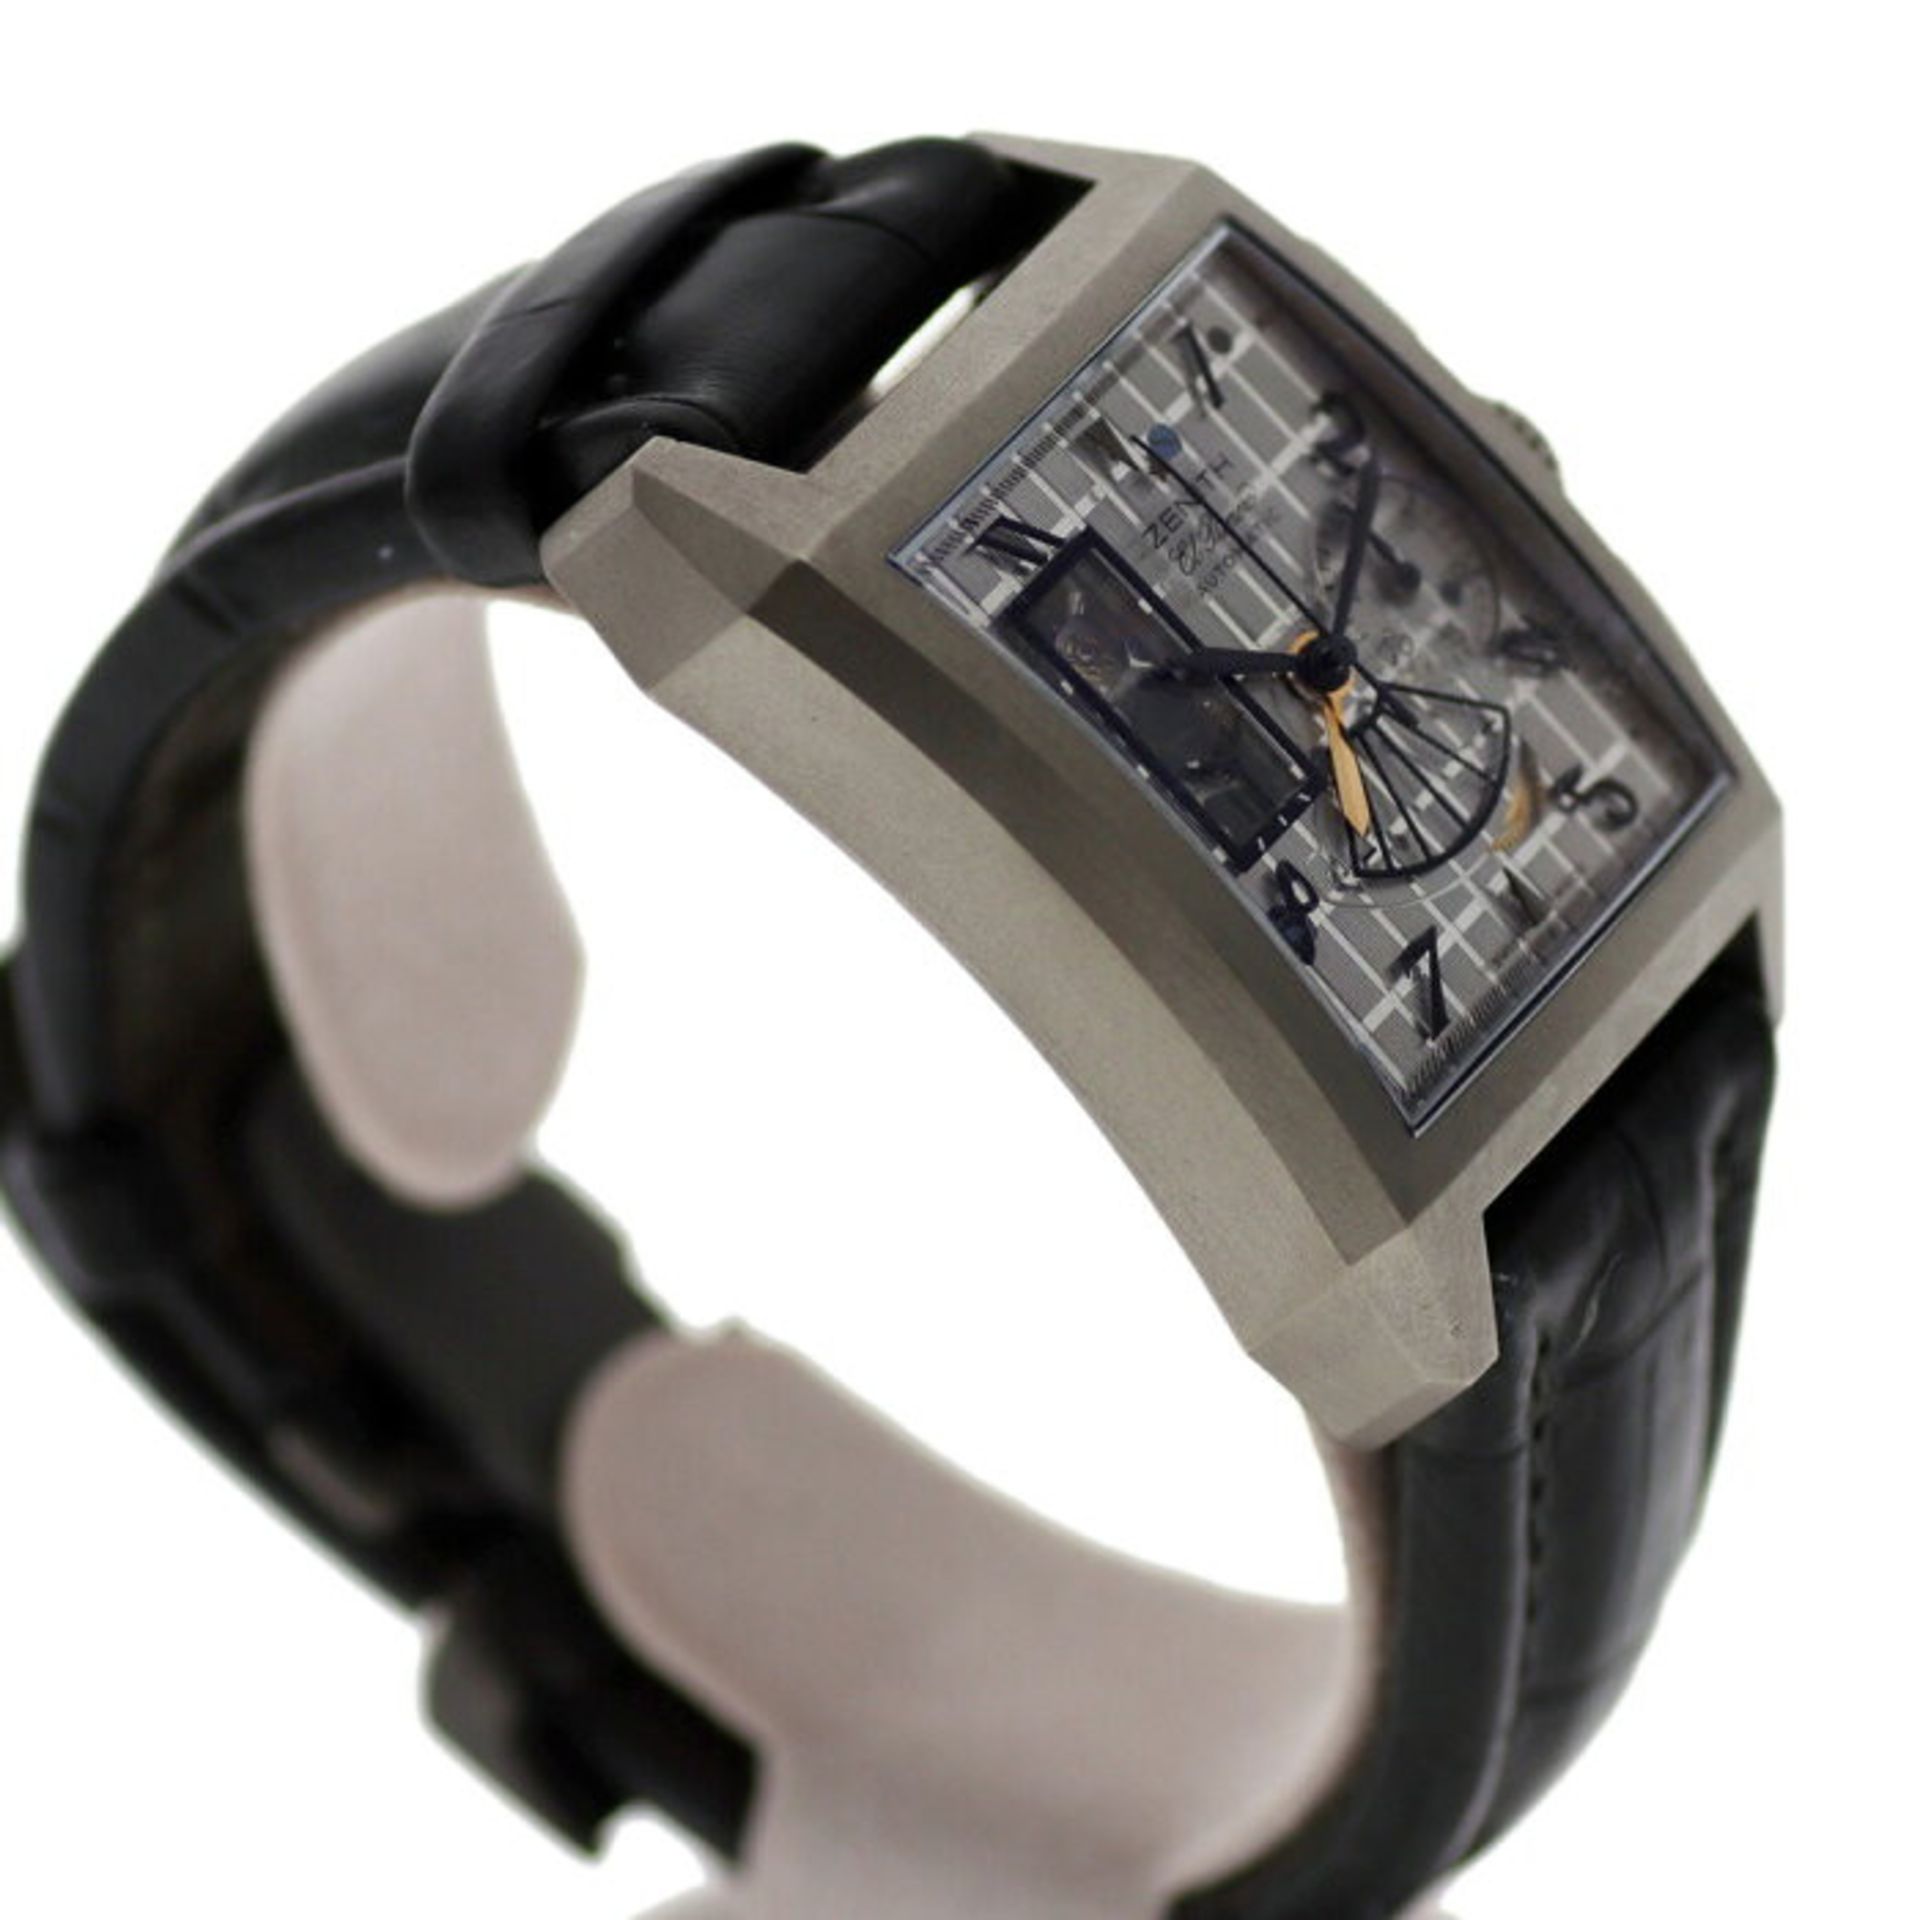 Zenith / Port Royal Open Concept - Gentlmen's Titanium Wrist Watch - Image 6 of 13